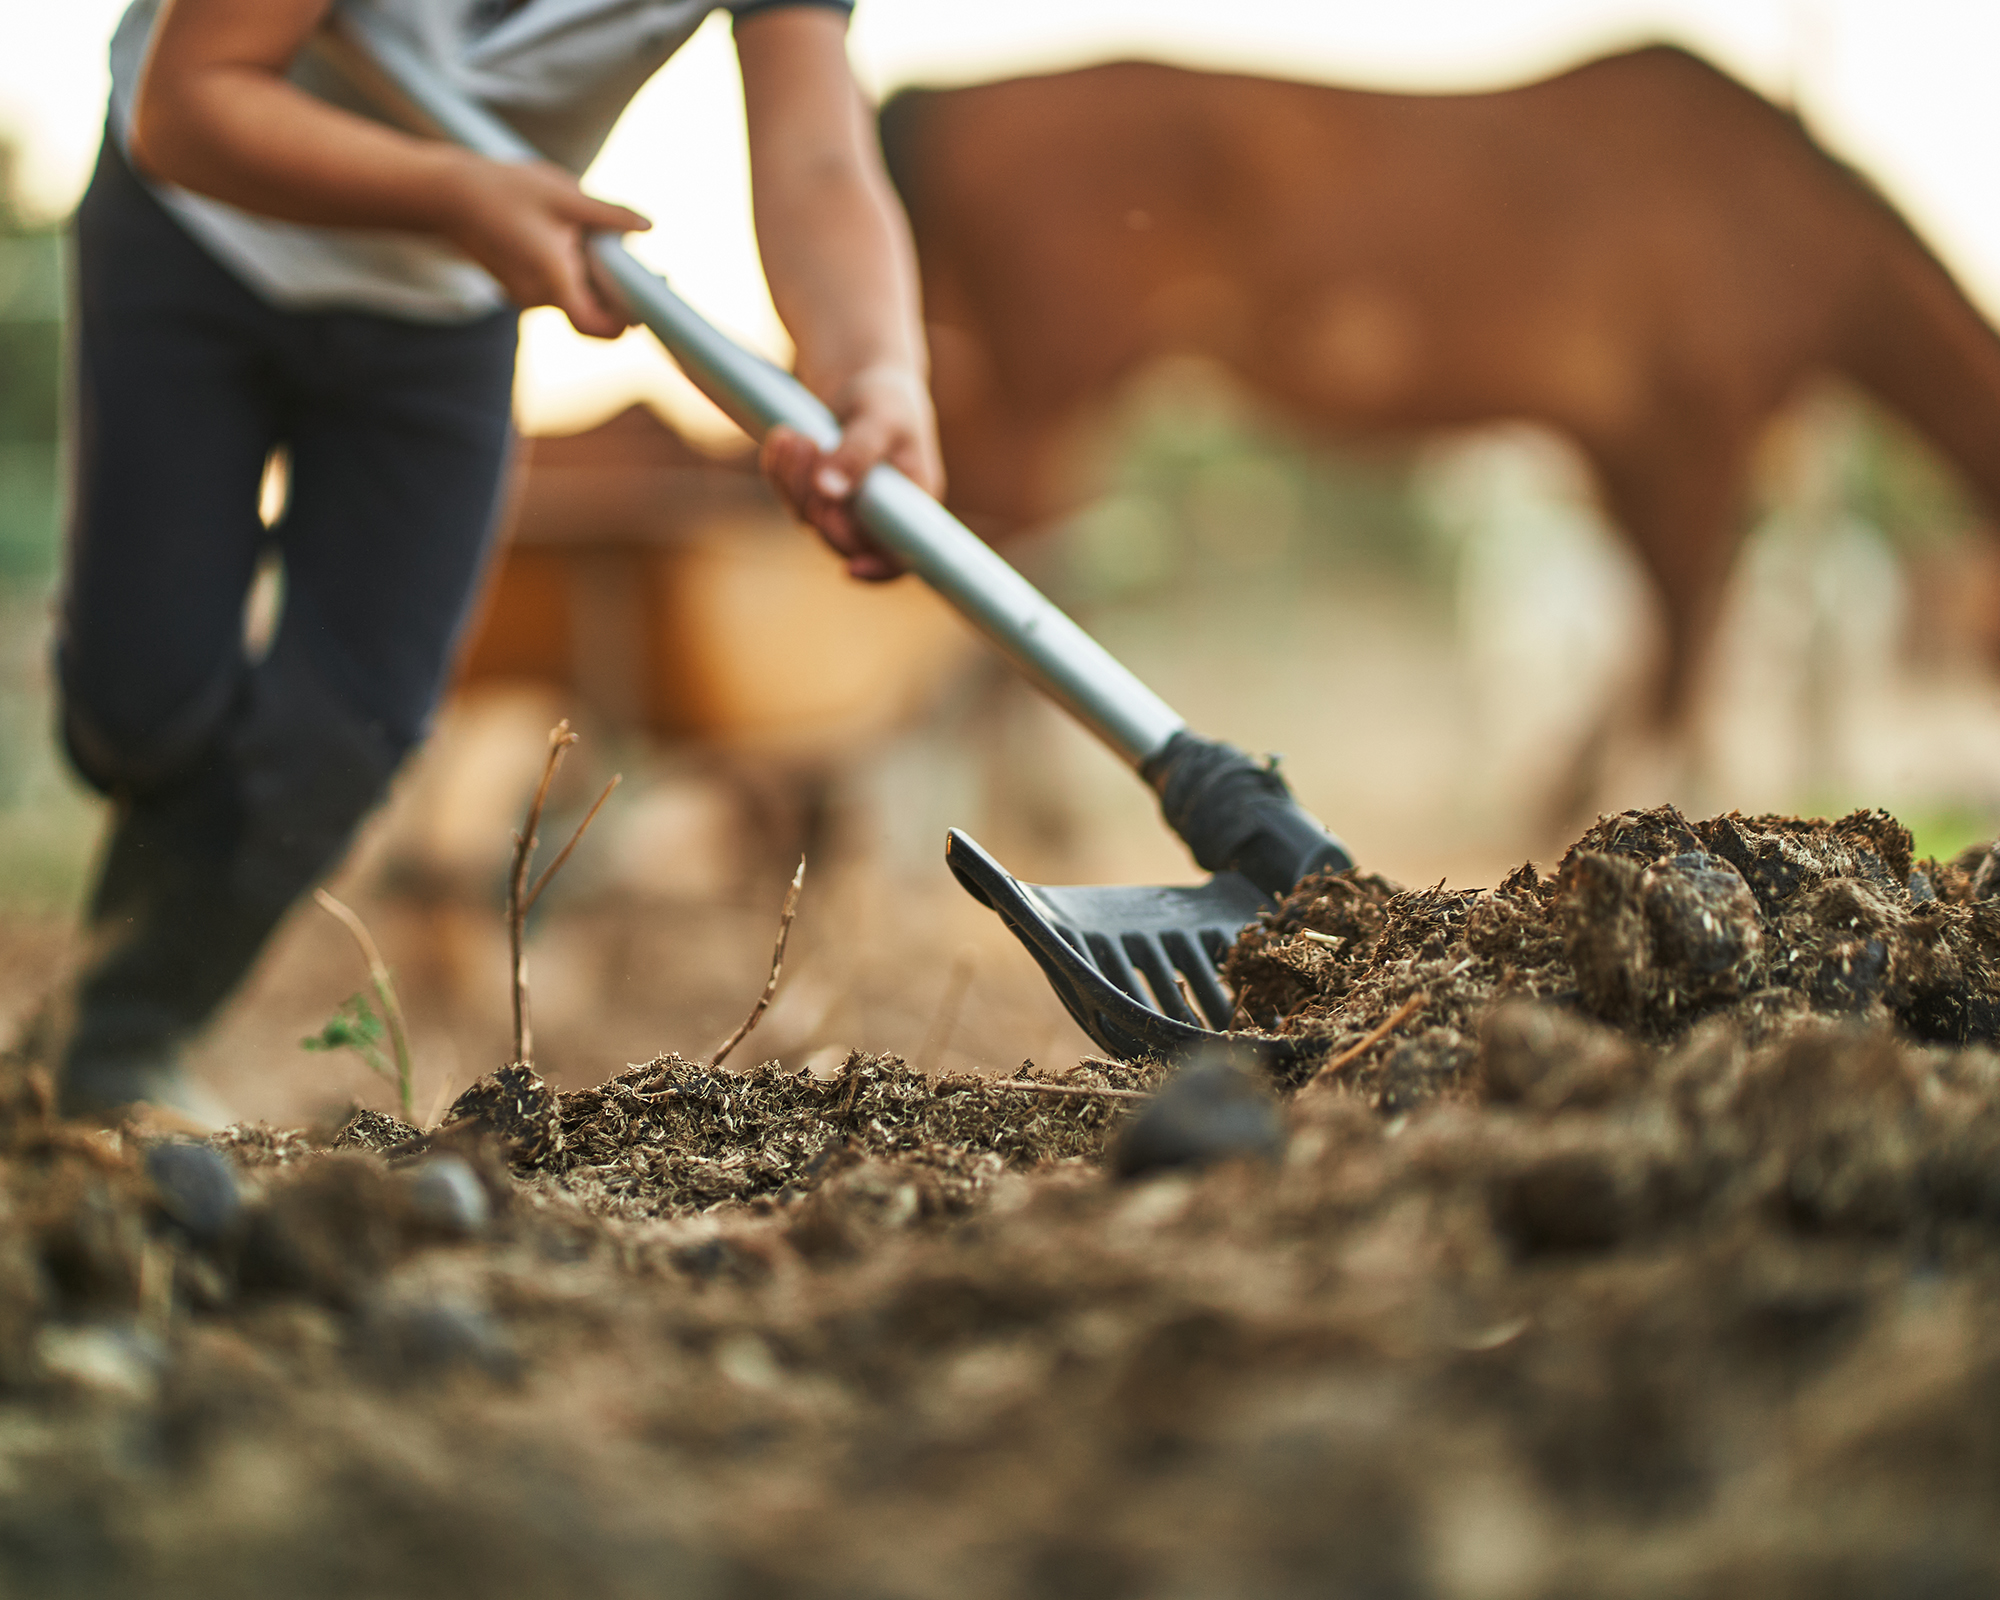 Digging manure at stables